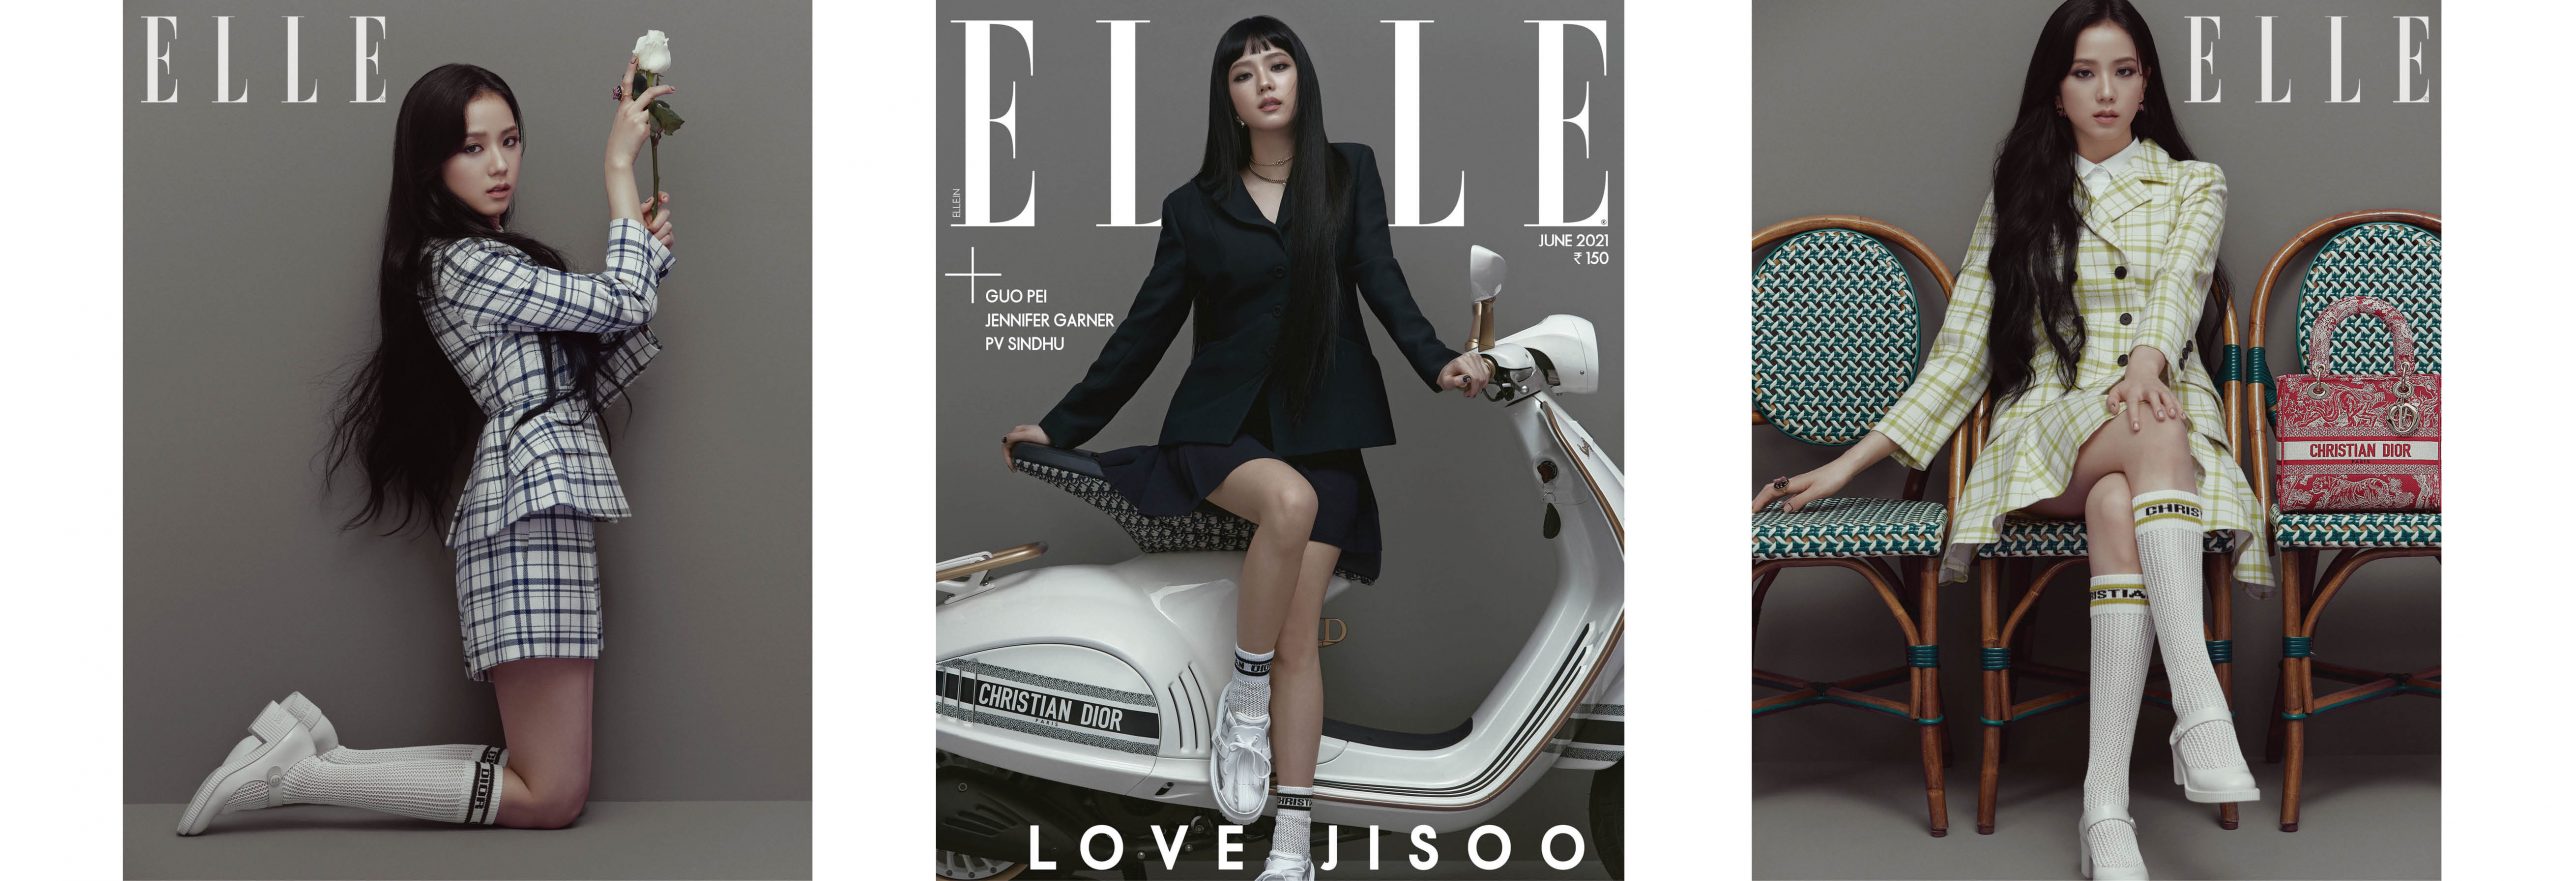 Dior names BTS singer Jimin as Brand Ambassador  Retail News Europe